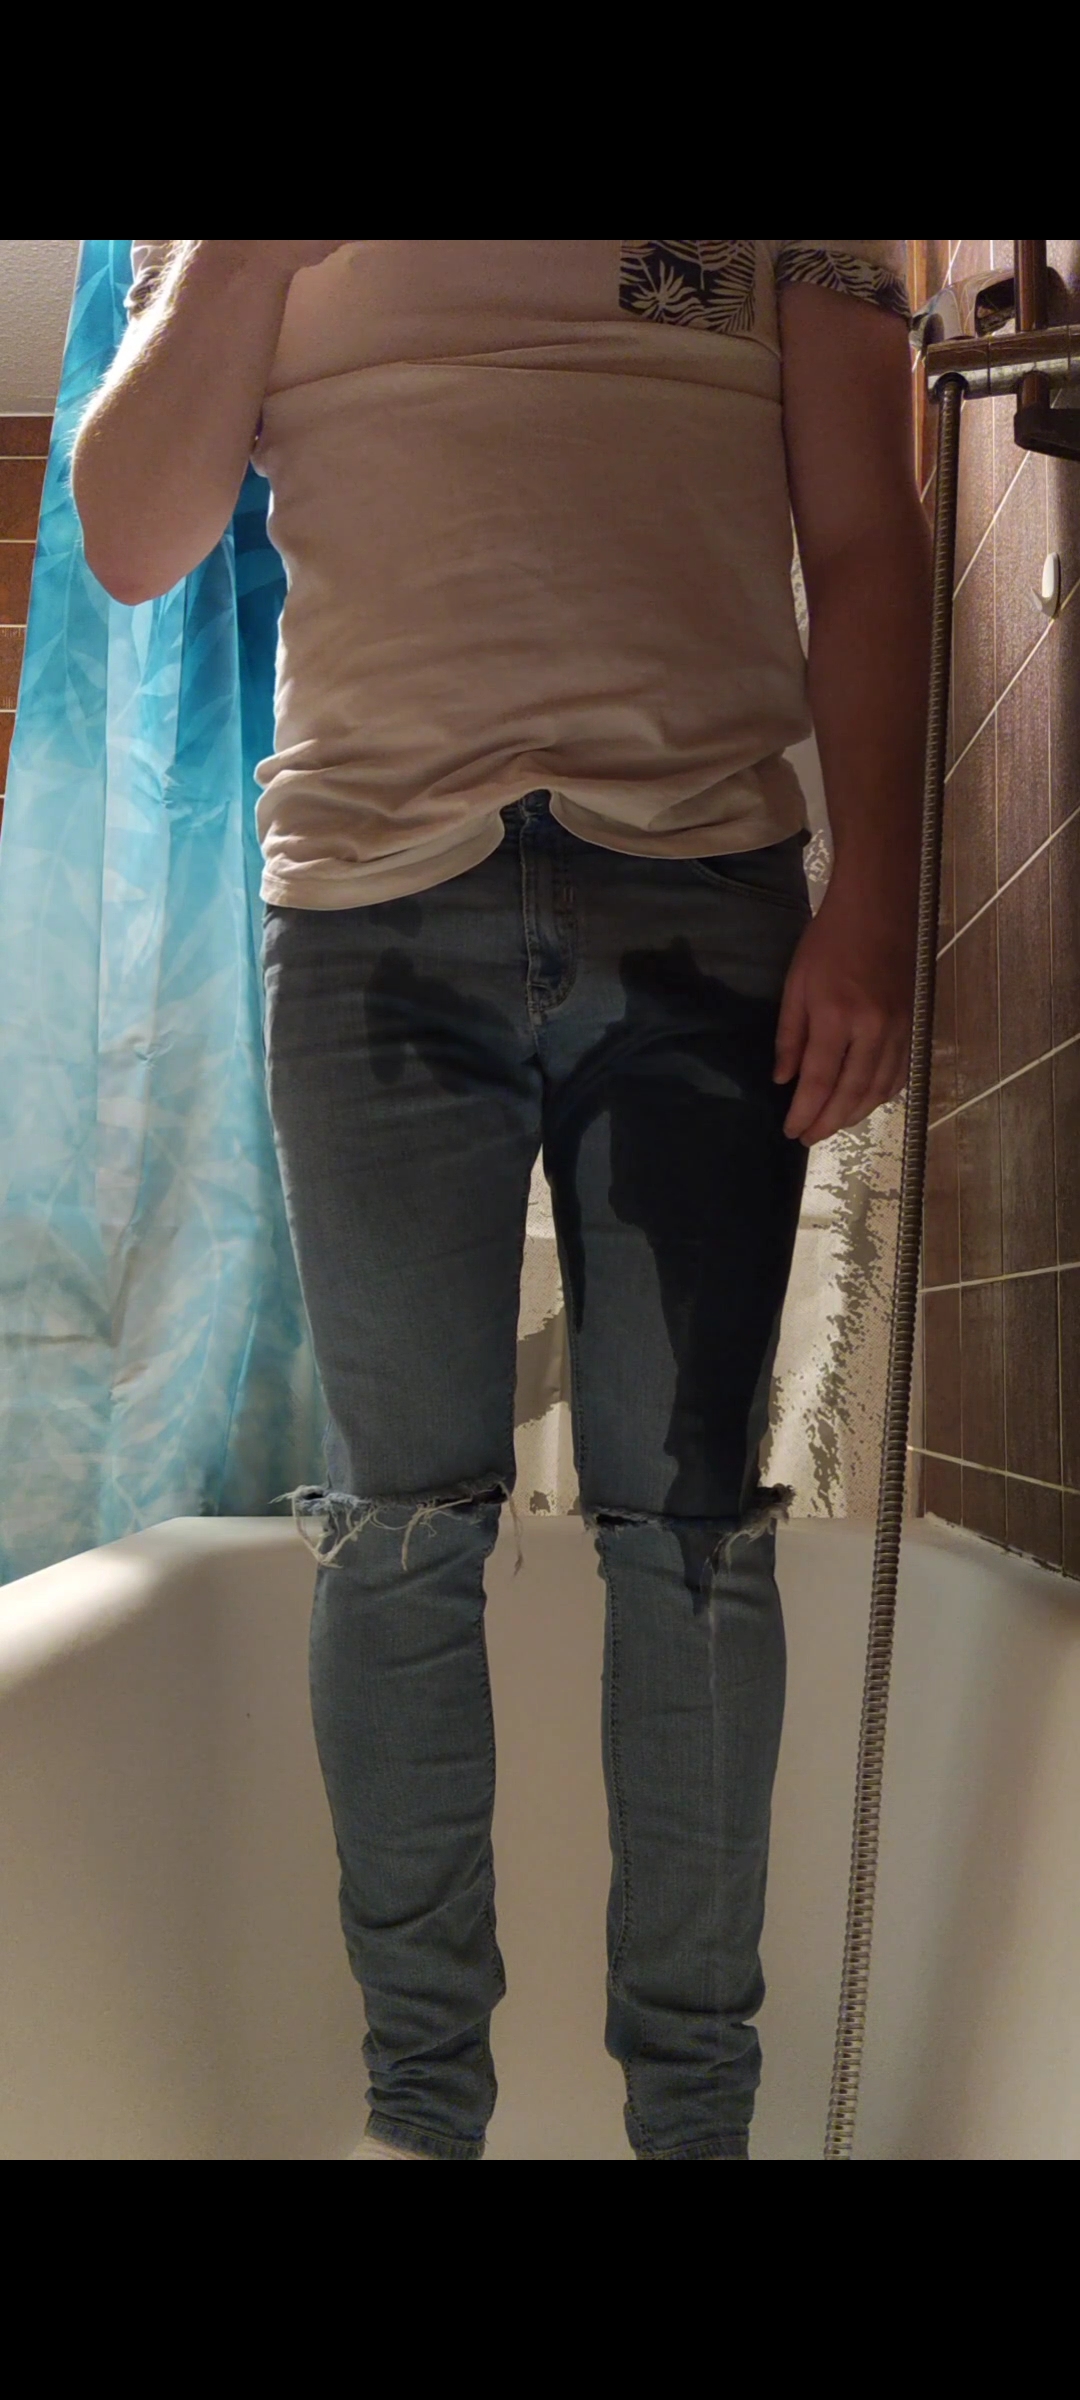 Desperate pee in blue jeans